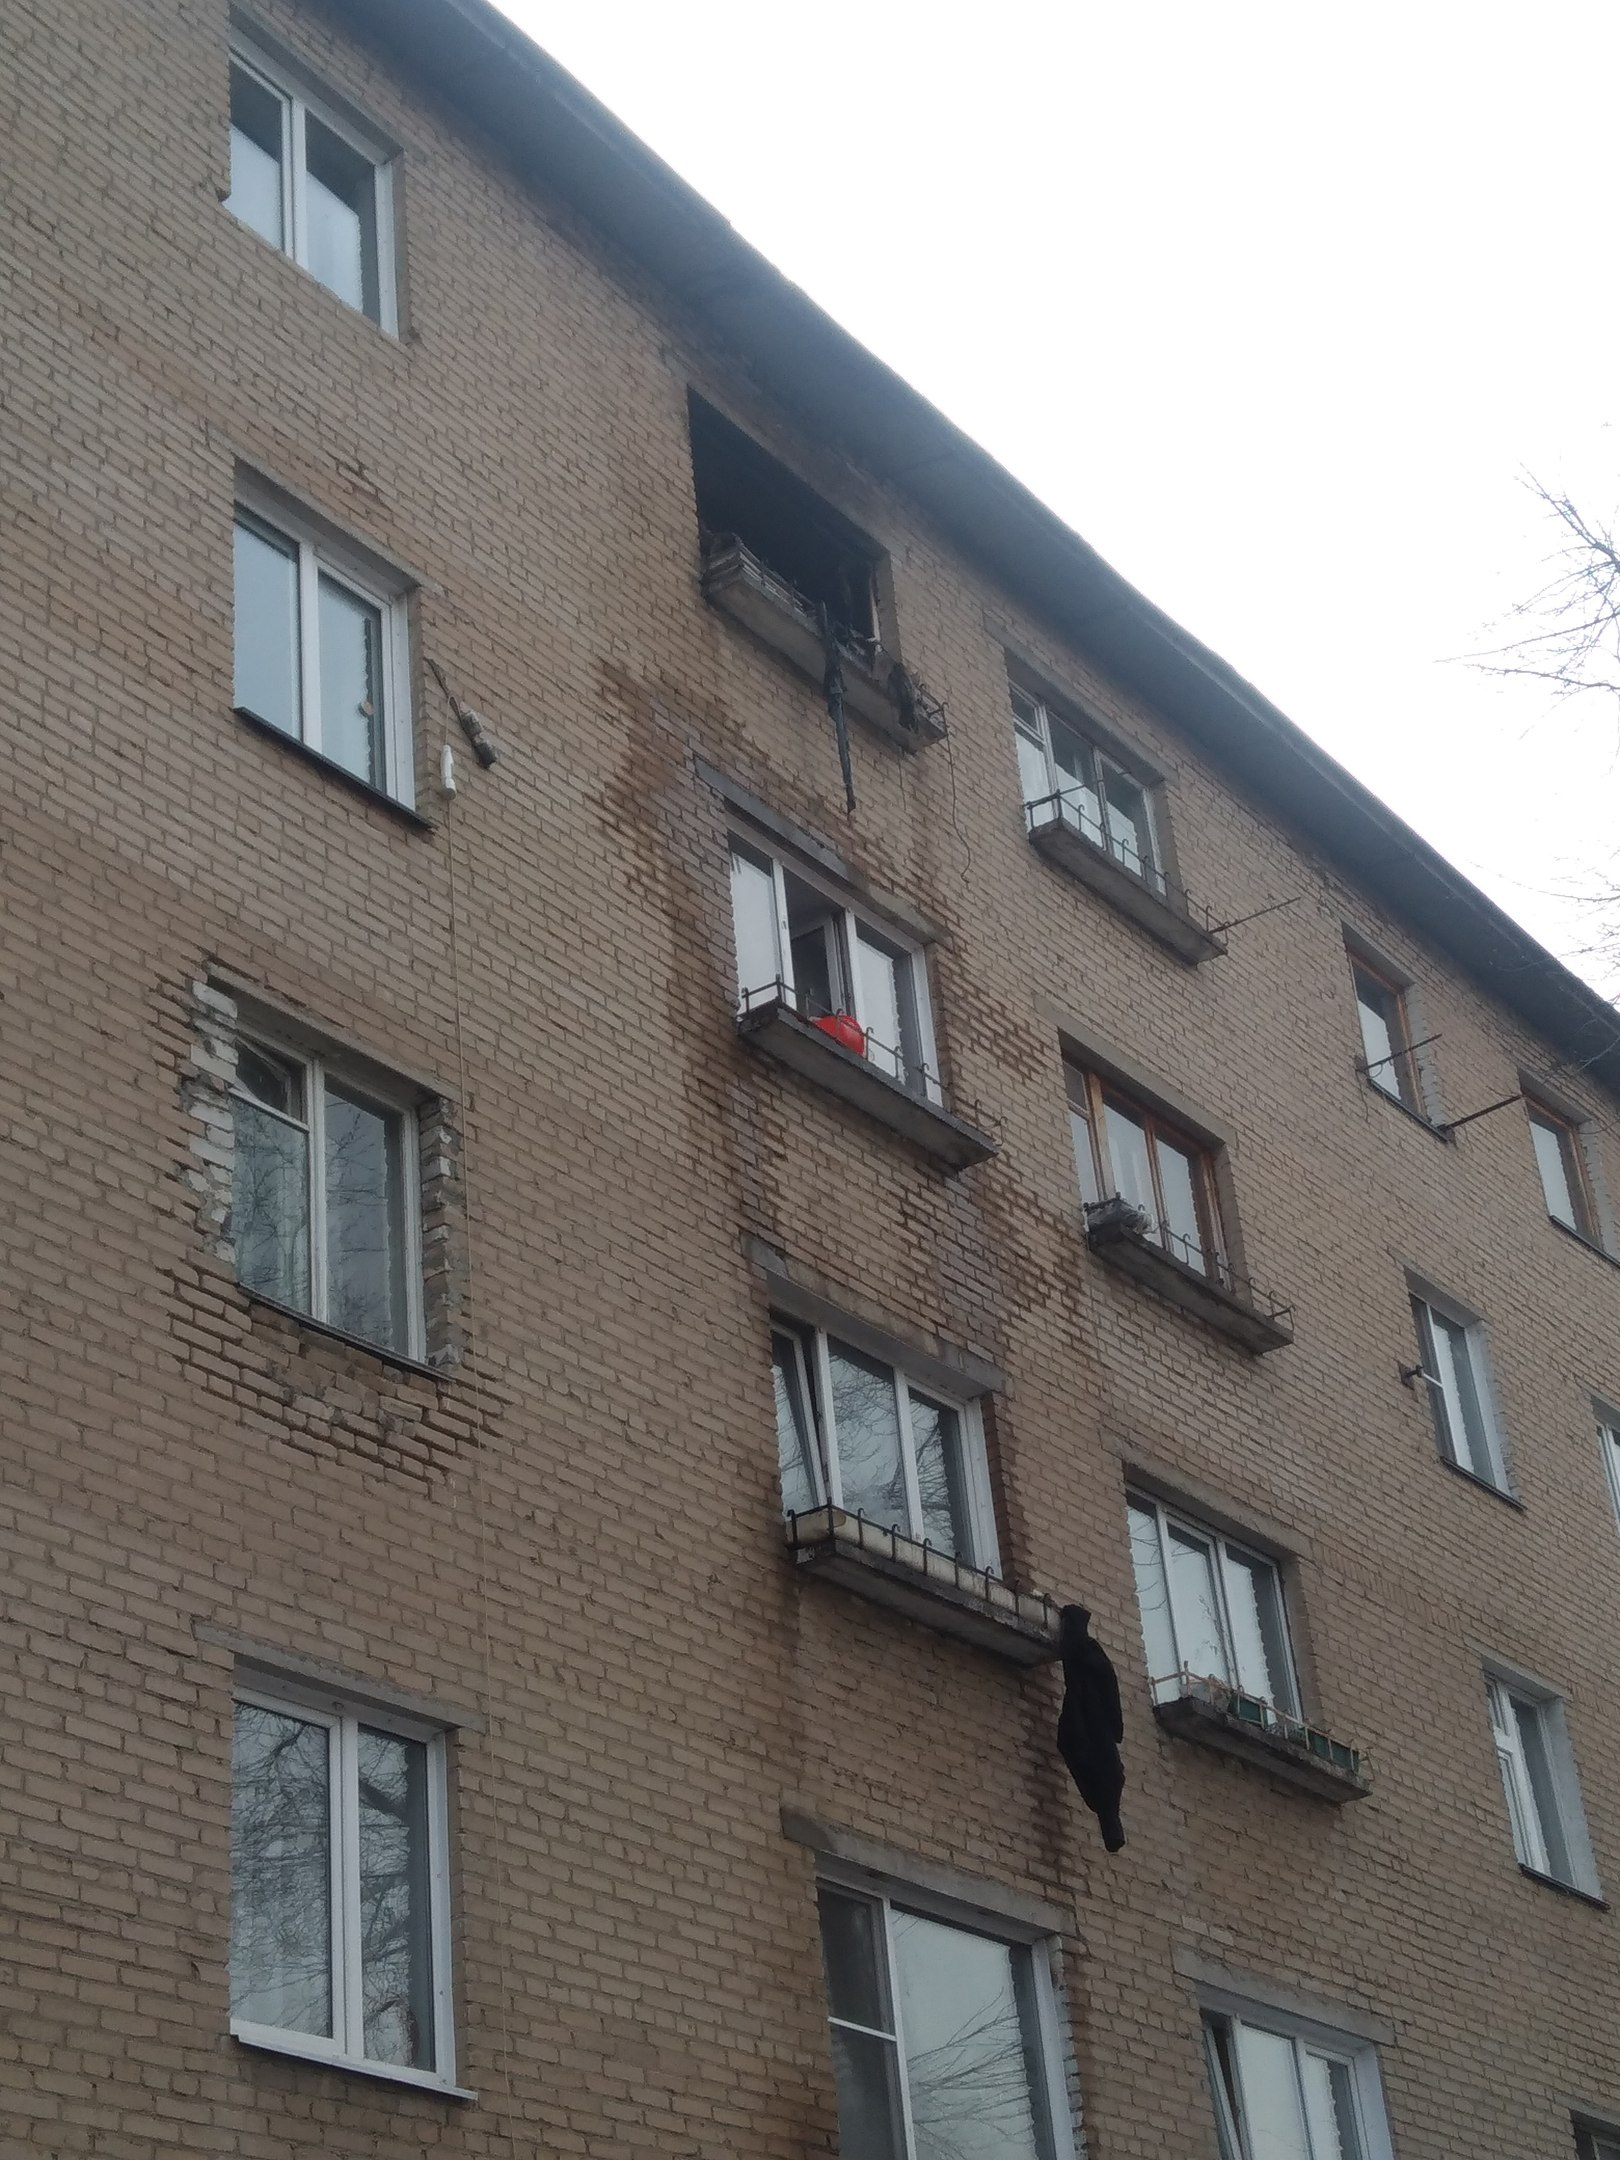 Во время пожара в квартире погиб мужчина